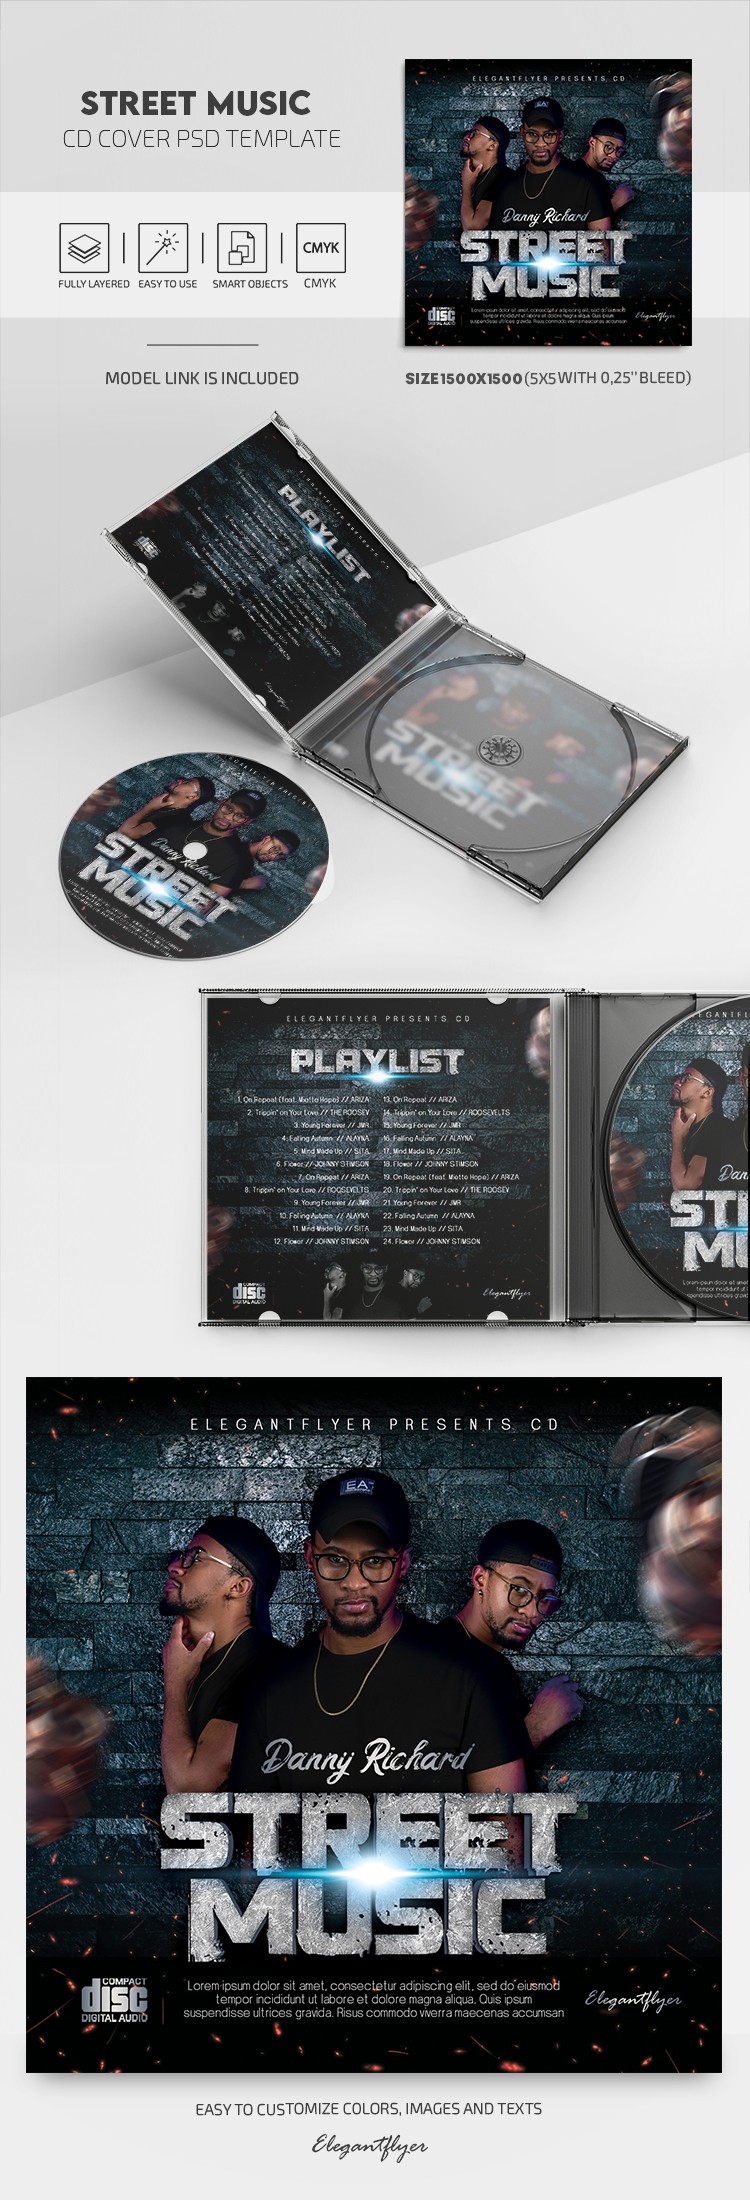 Música de rua - Modelo de capa de CD Premium PSD by ElegantFlyer